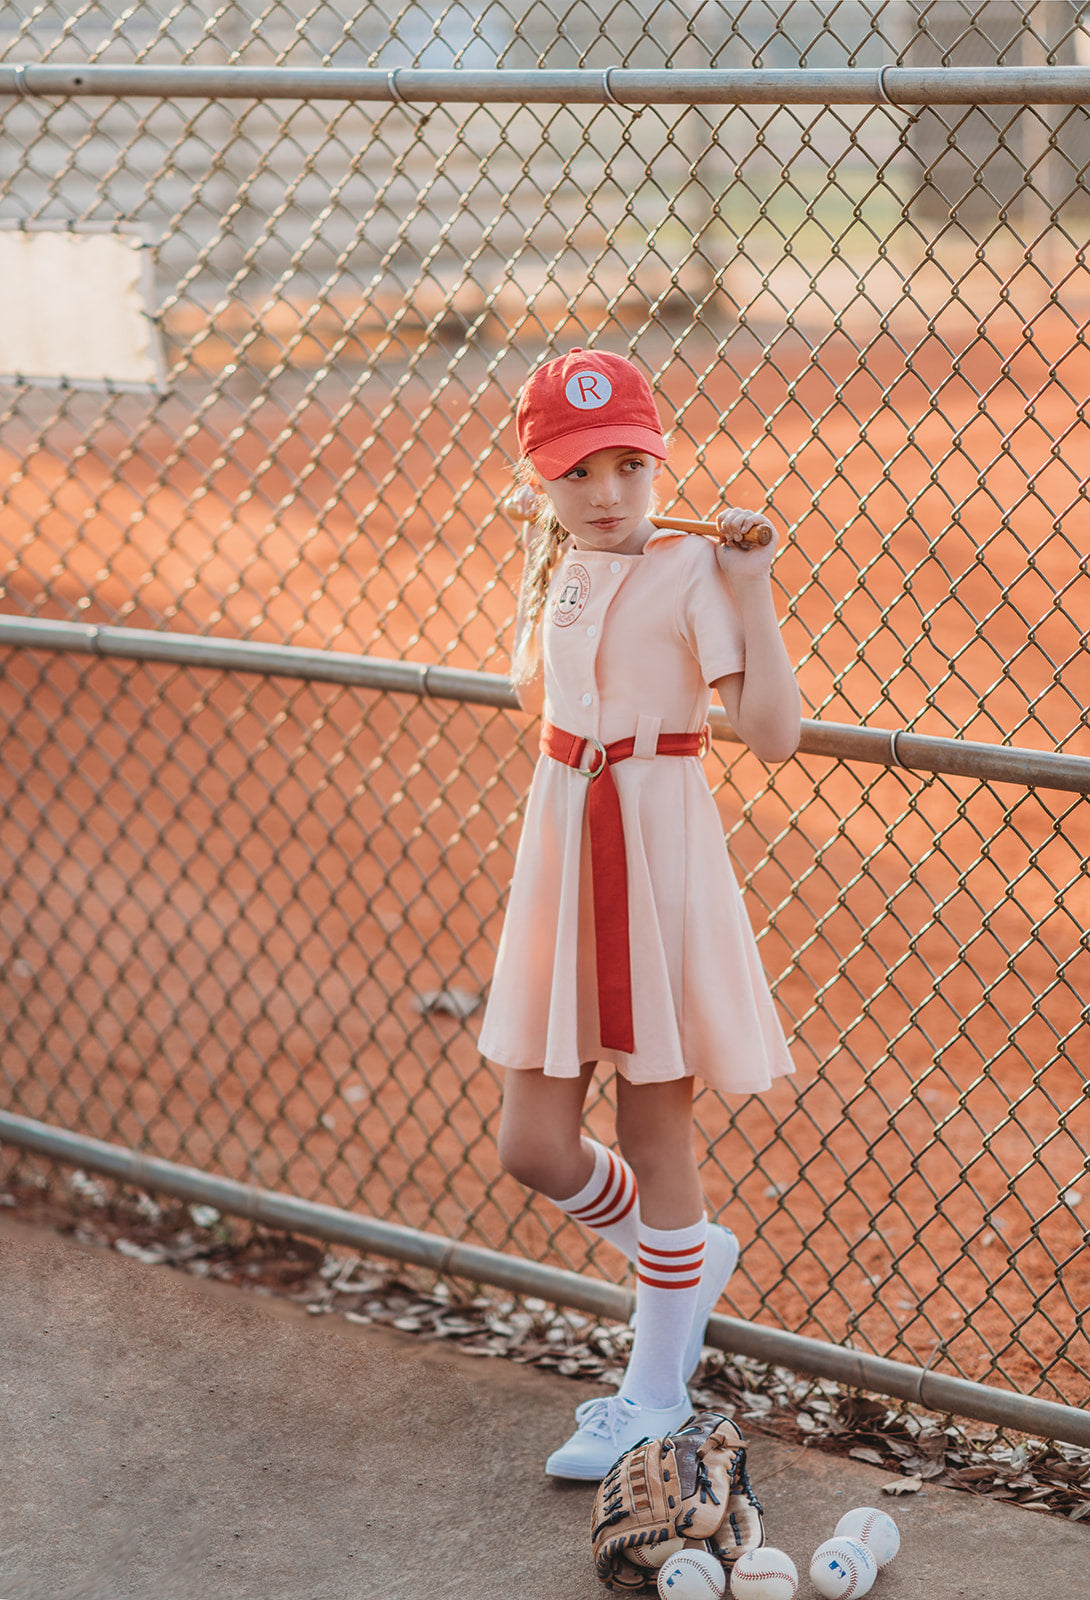 baseball dress